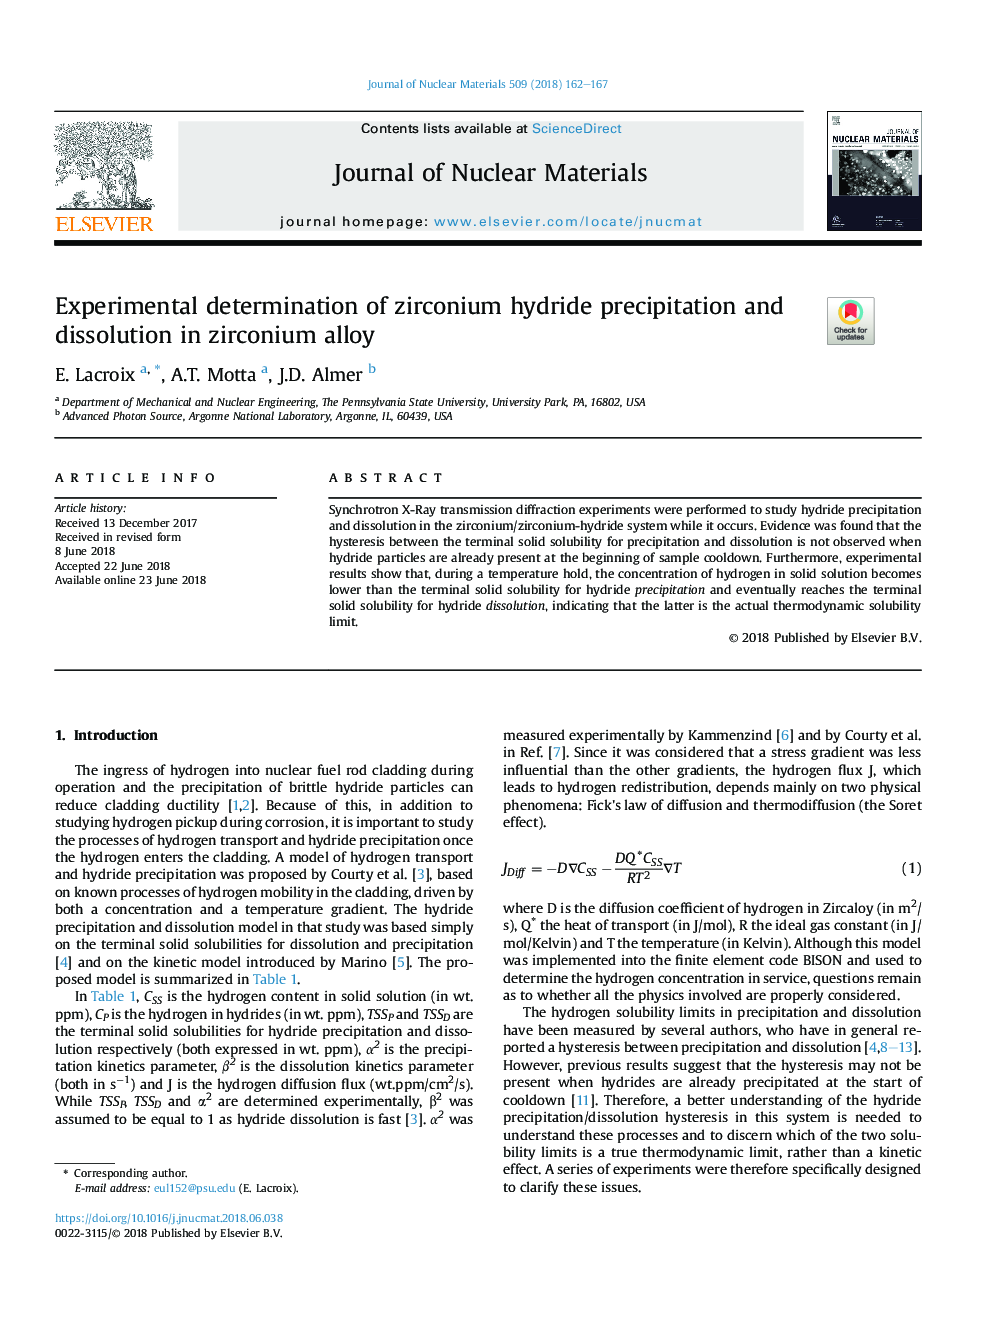 Experimental determination of zirconium hydride precipitation and dissolution in zirconium alloy